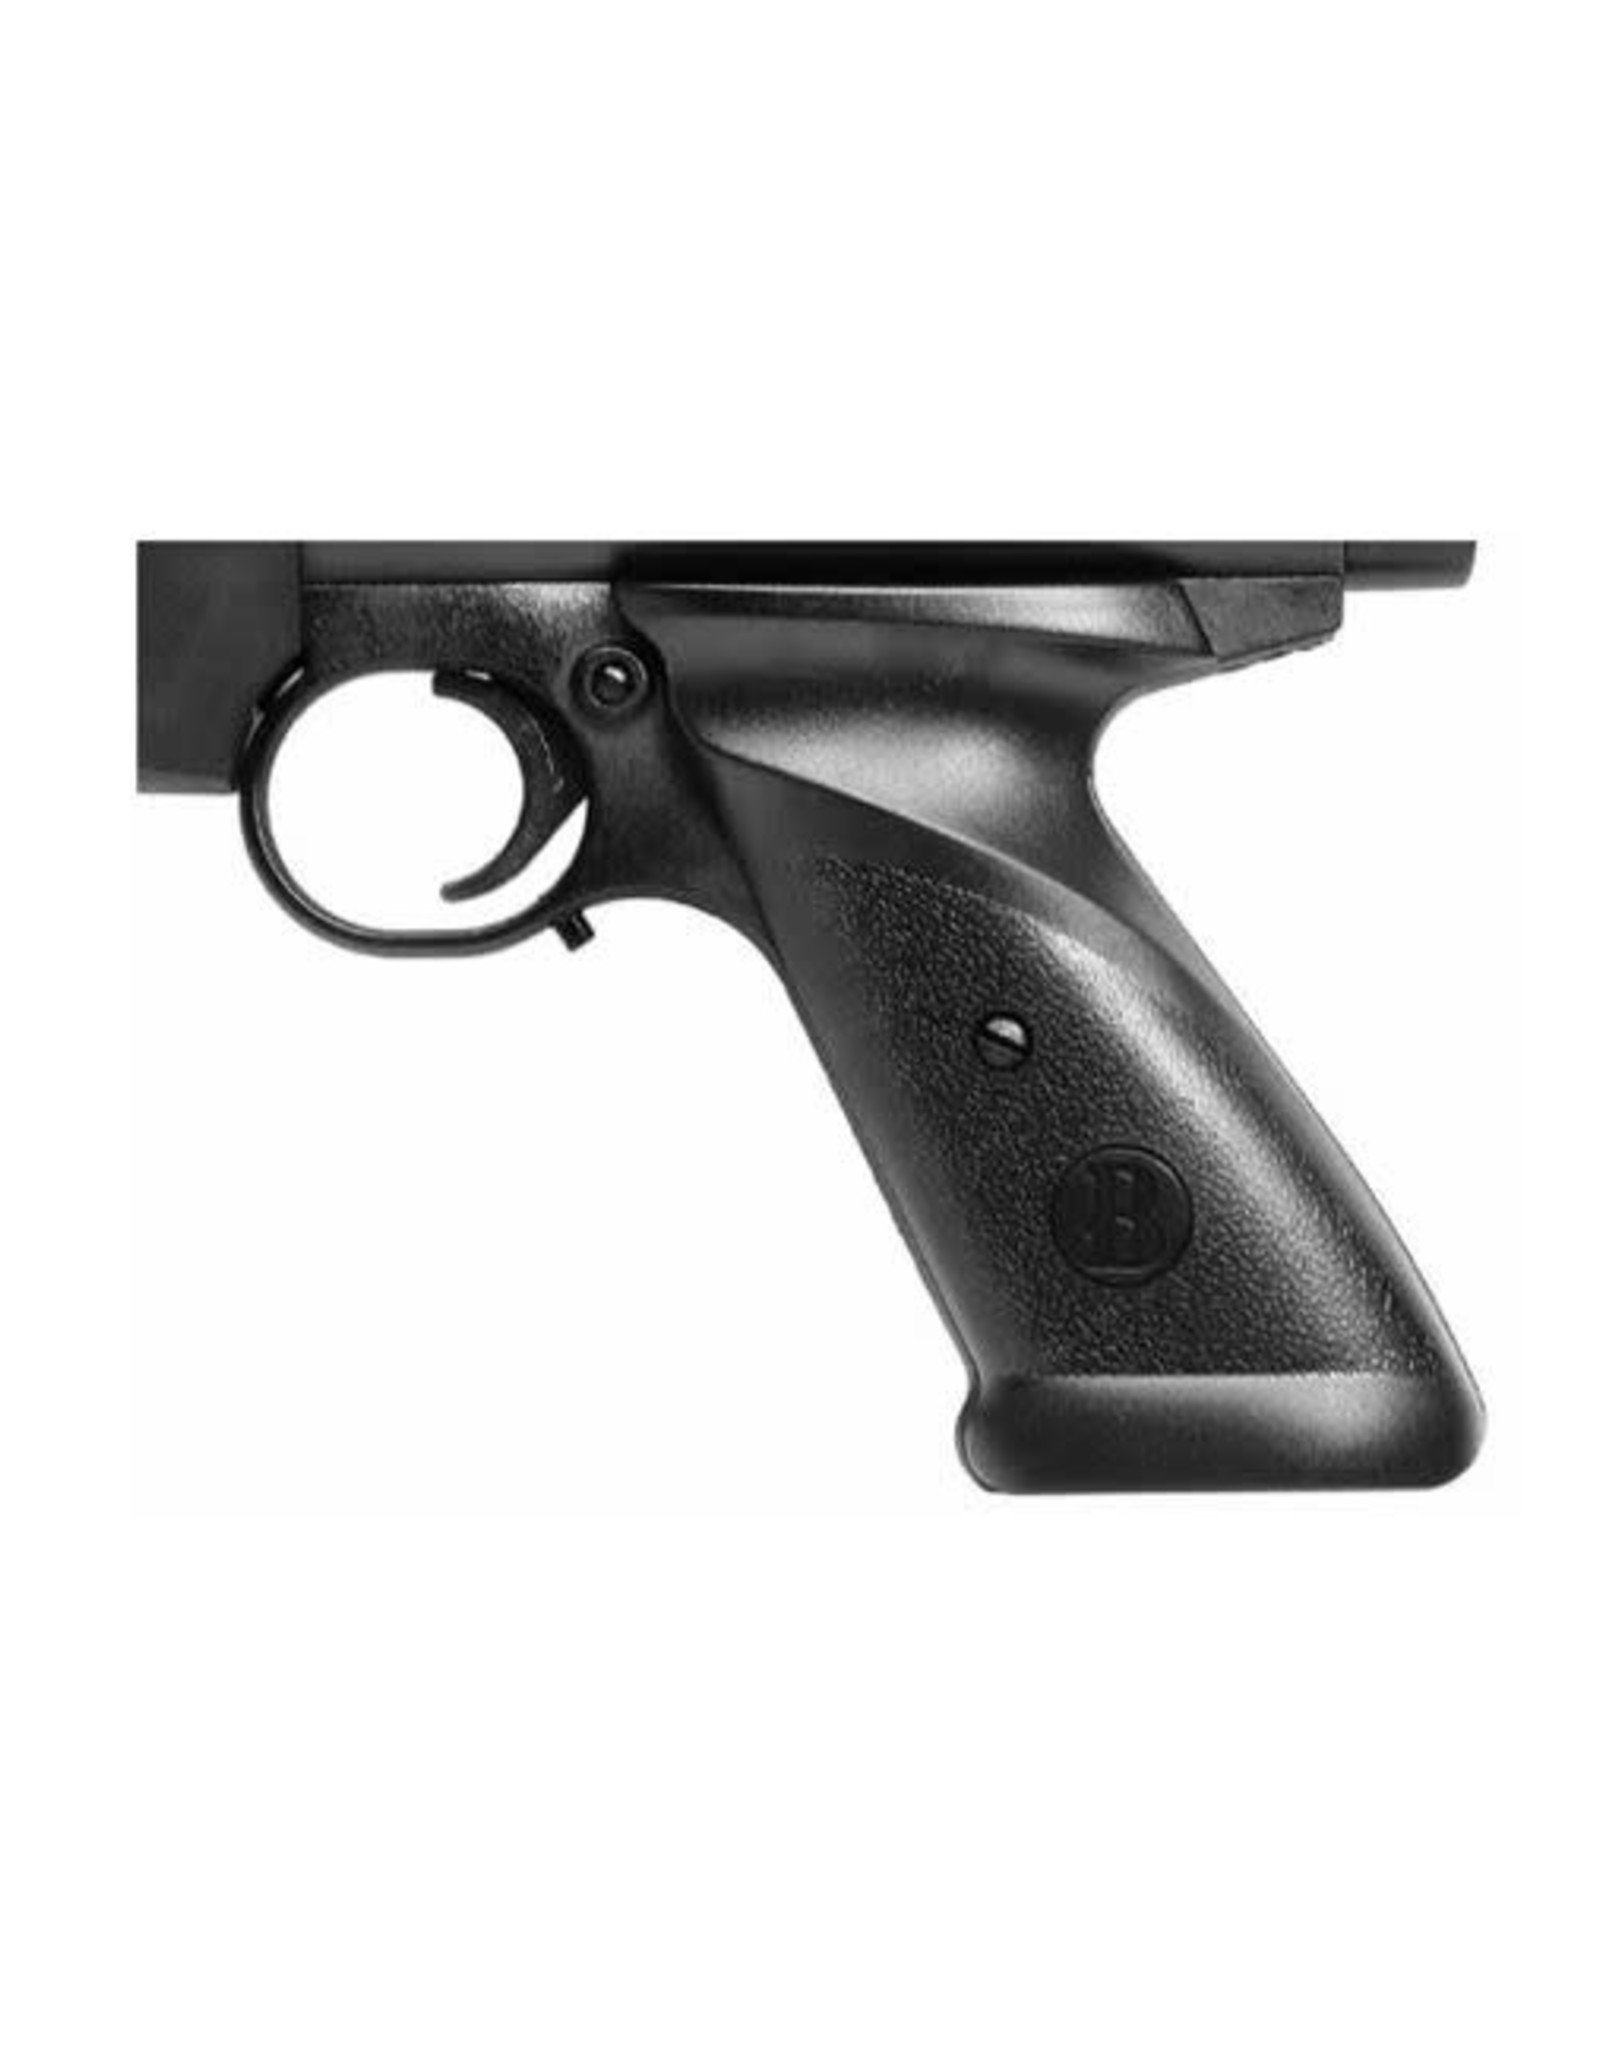 Benjamin Benjamin Marauder PCP Air Pistol .22 Caliber (5.5mm) - 8 Round Circular Magazine